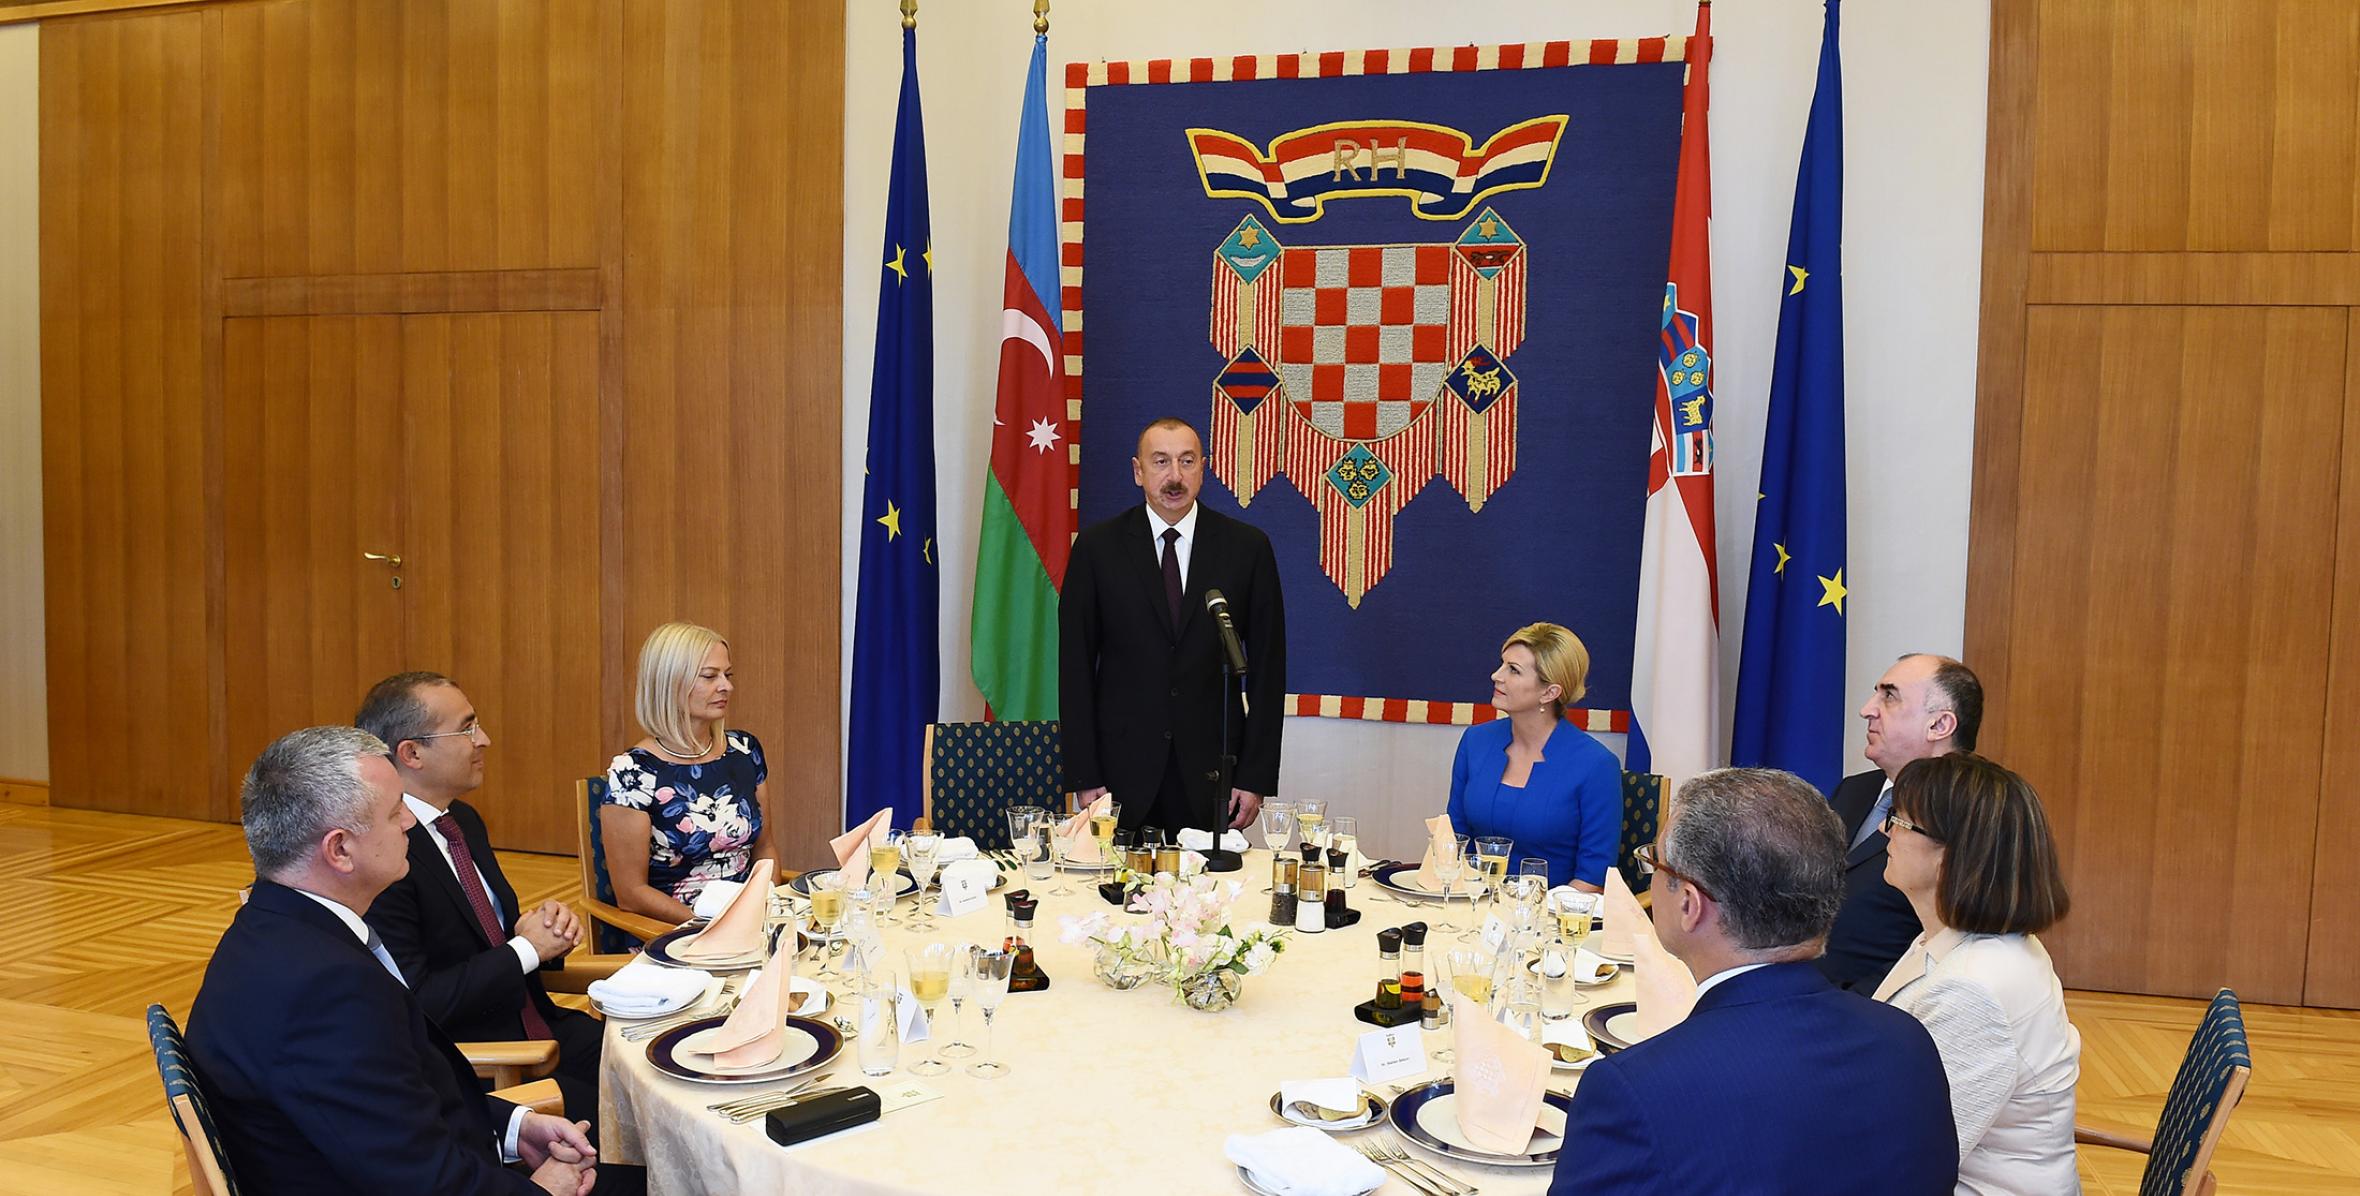 President of the Republic of Croatia Kolinda Grabar-Kitarovic has hosted an official reception in honor of President of the Republic of Azerbaijan Ilham Aliyev